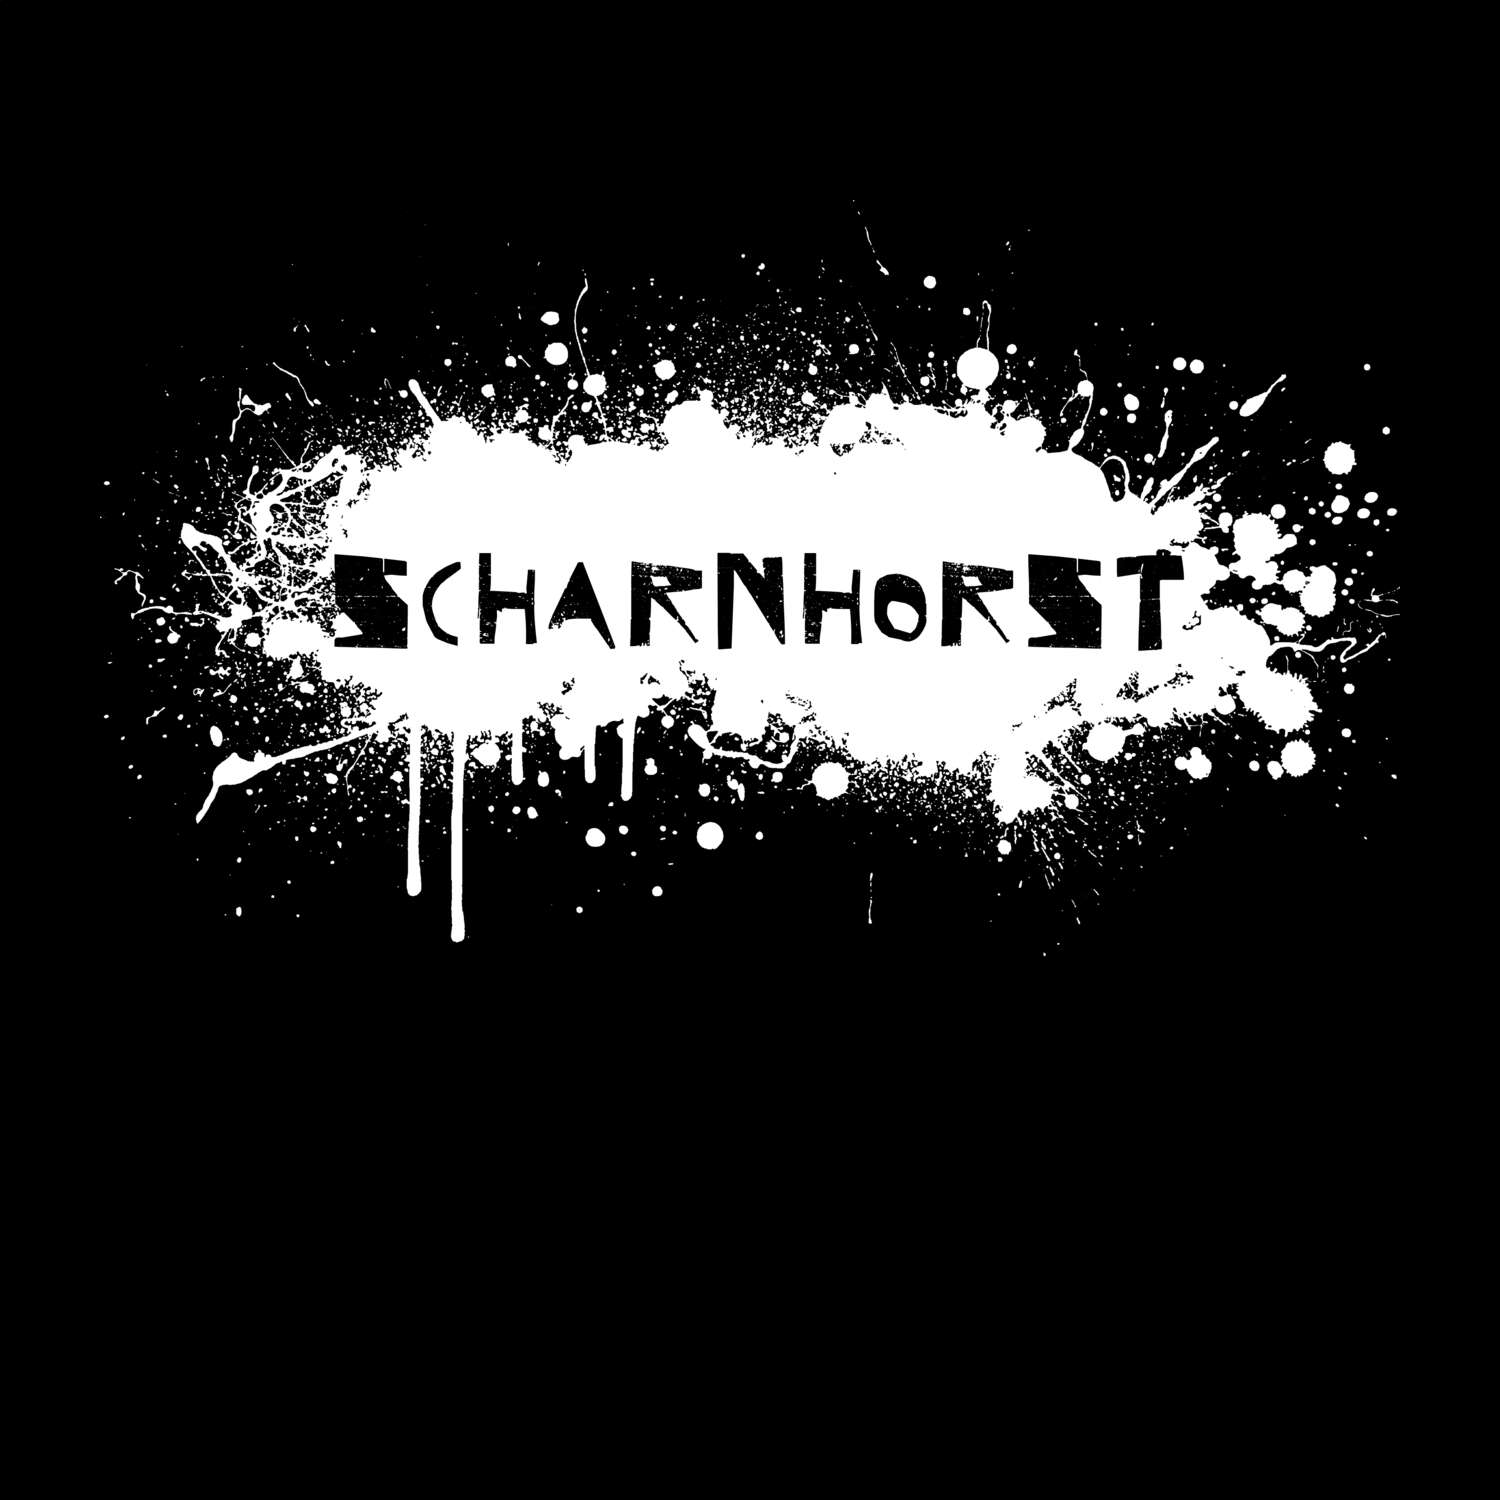 Scharnhorst T-Shirt »Paint Splash Punk«